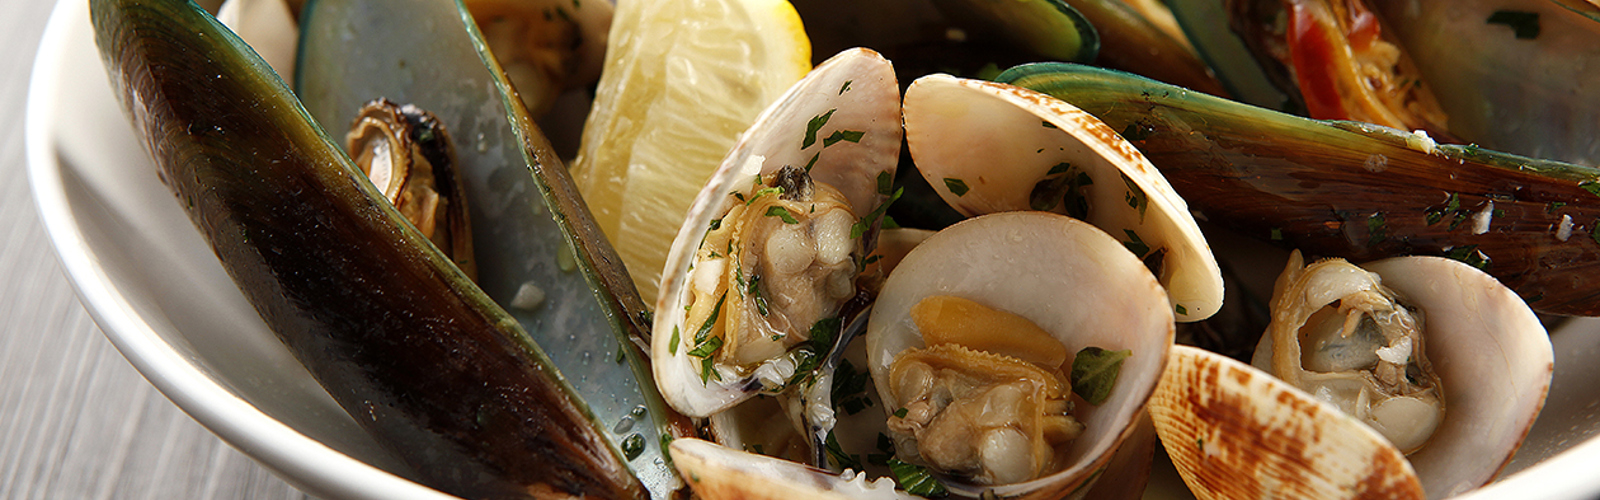 Shellfish in a food dish